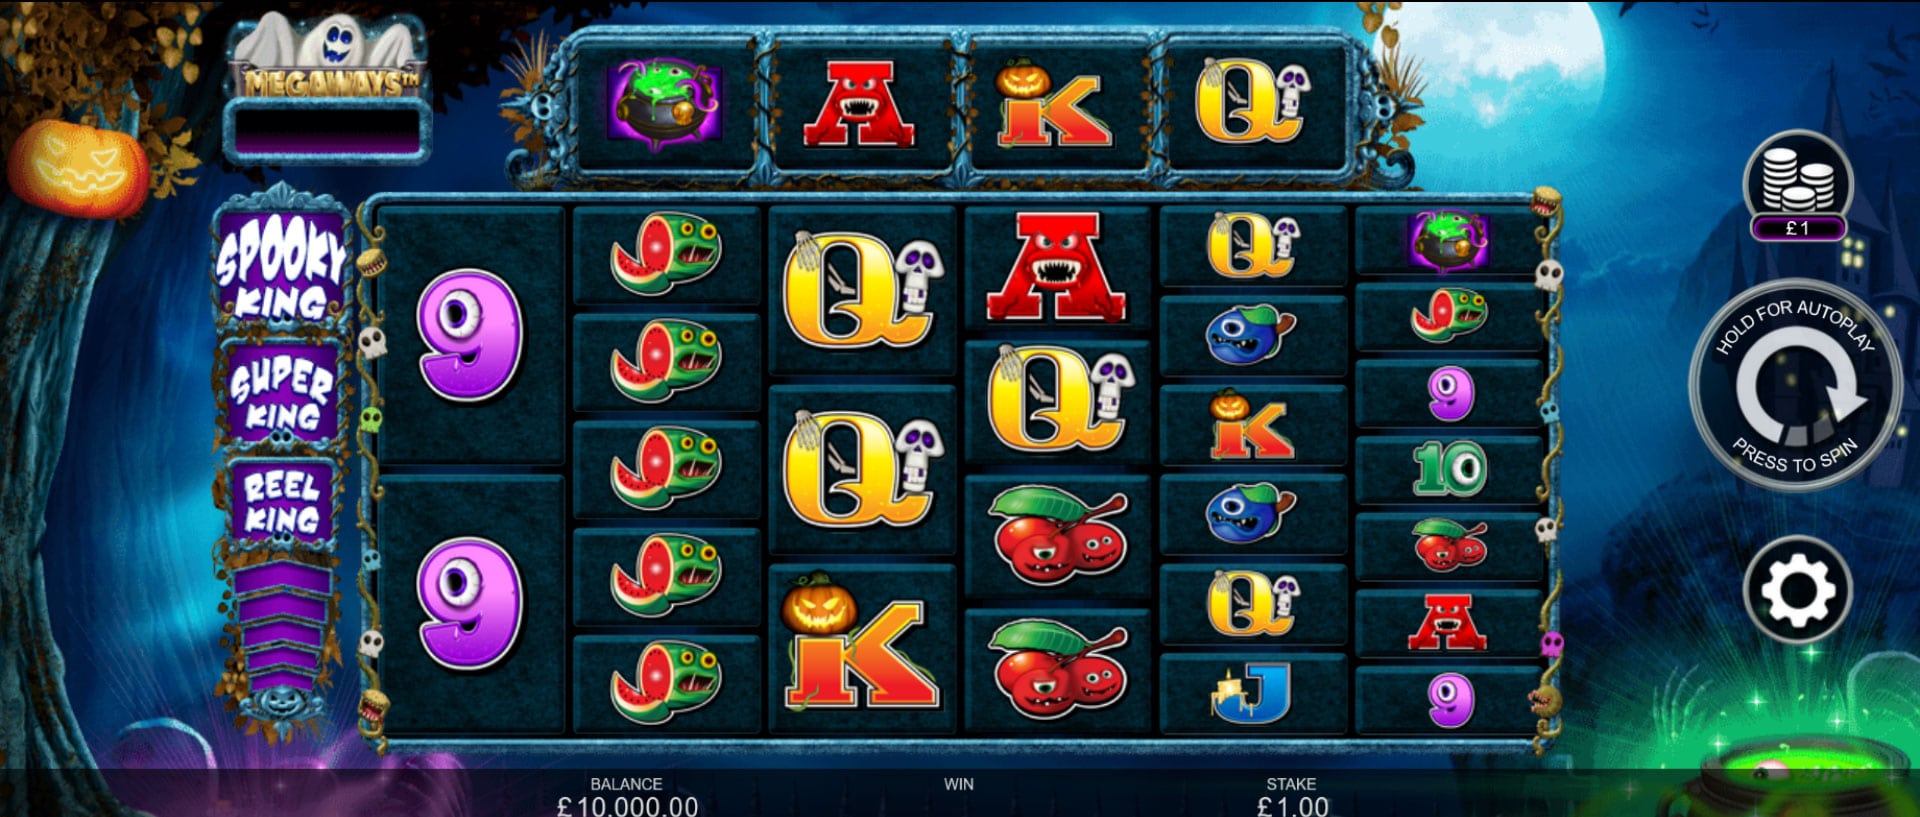 schermata del gioco slot machine reel spooky king megaways